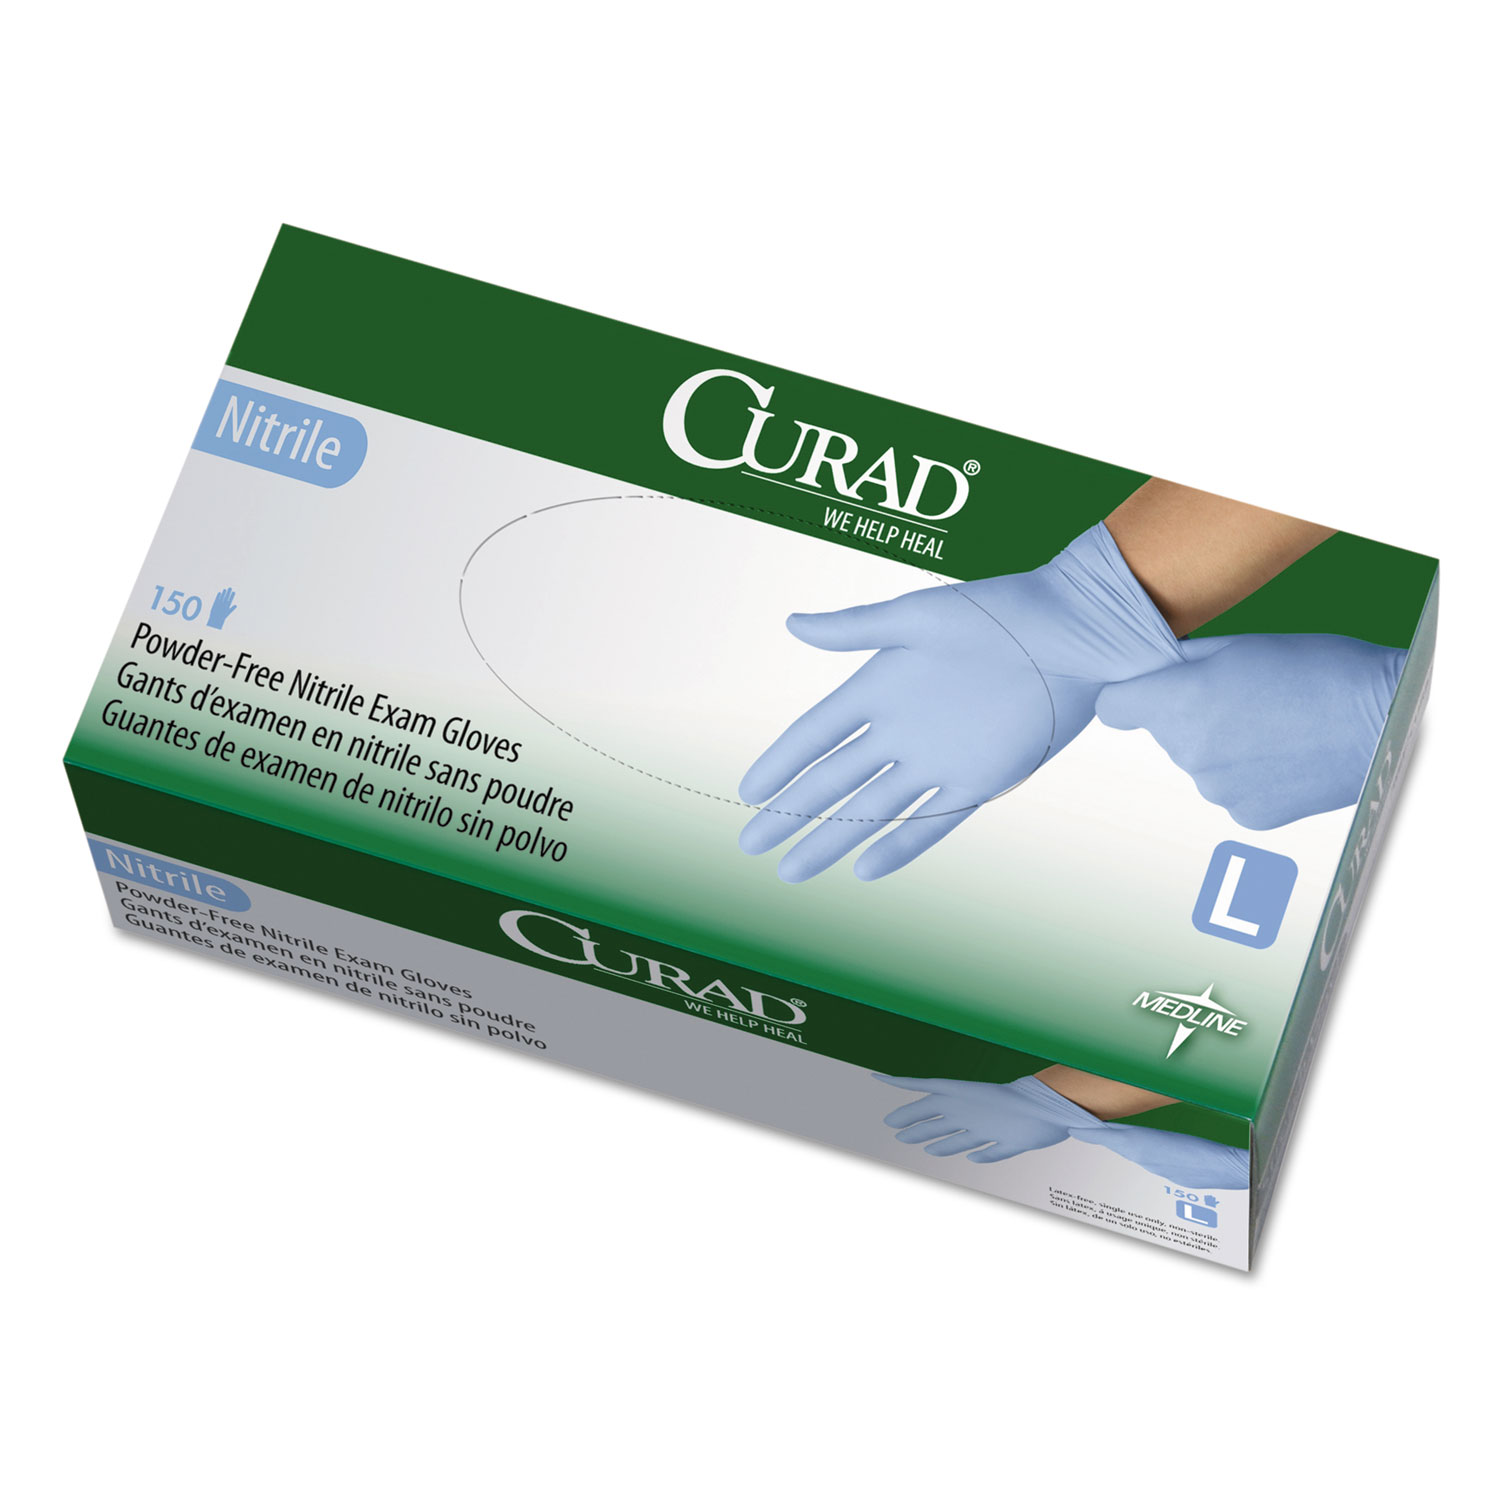  Curad CUR9316 Nitrile Exam Glove, Powder-Free, Large, 150/Box (MIICUR9316) 